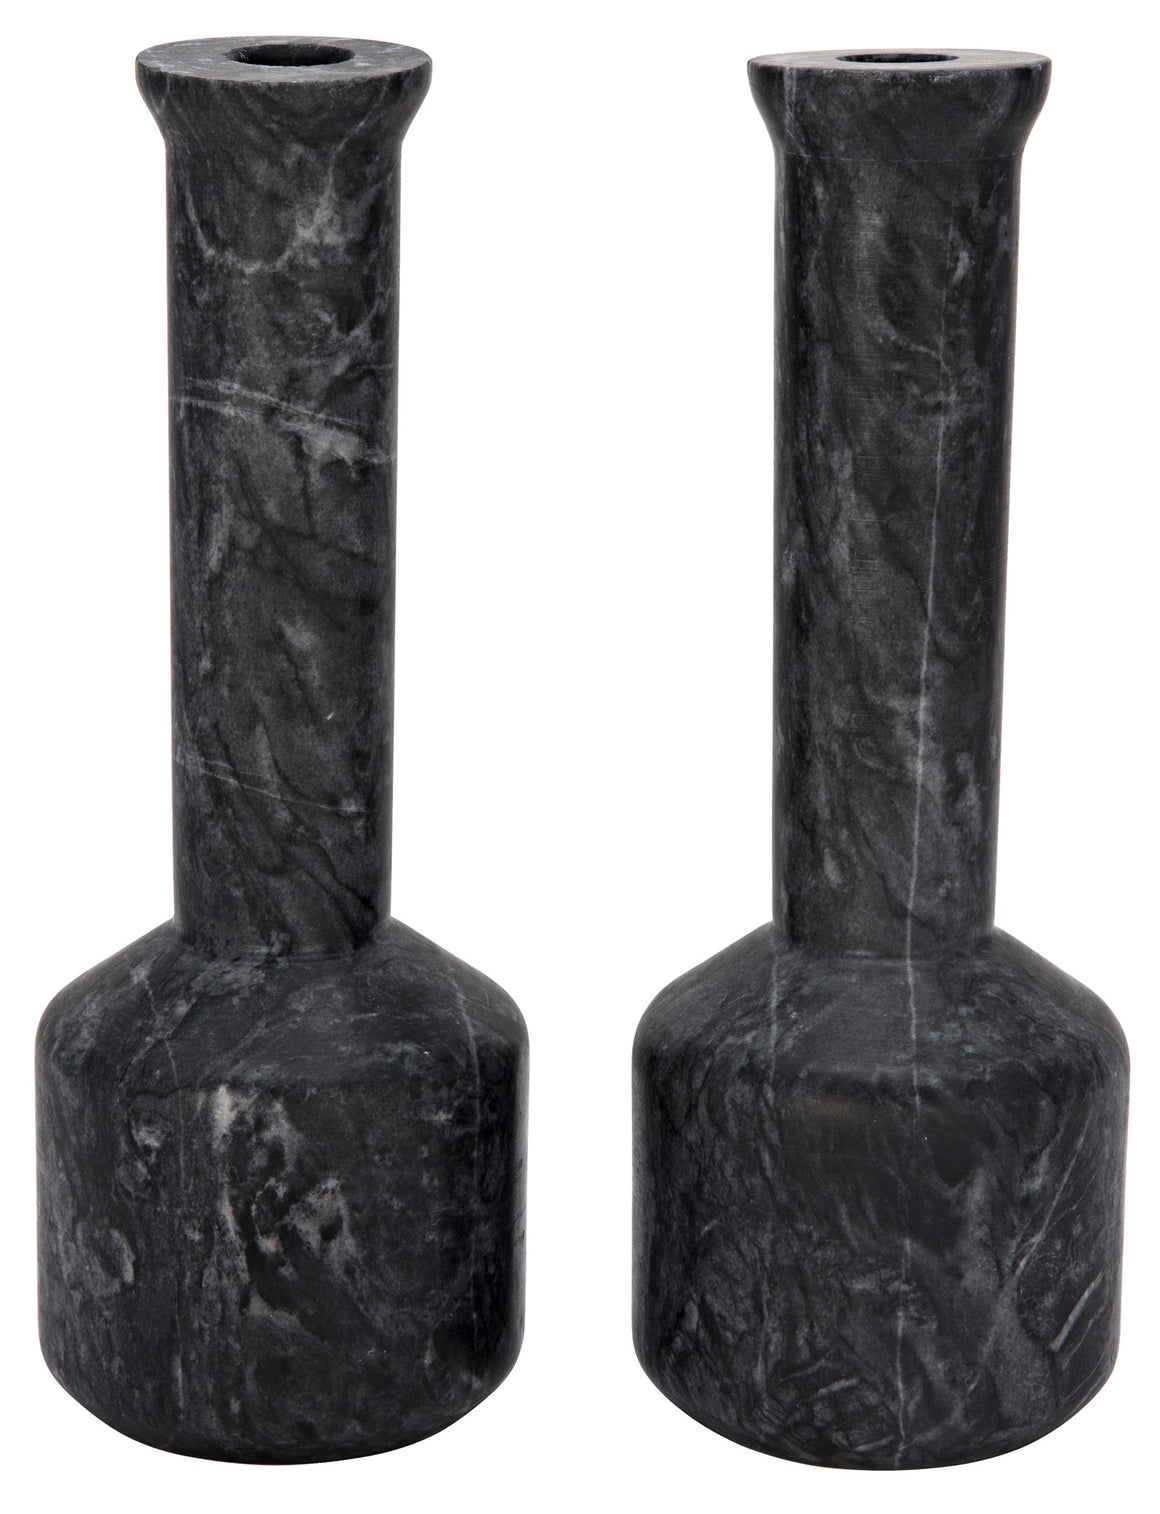 Noir Markos Decorative Candle Holder - Set of 2 - Black Marble